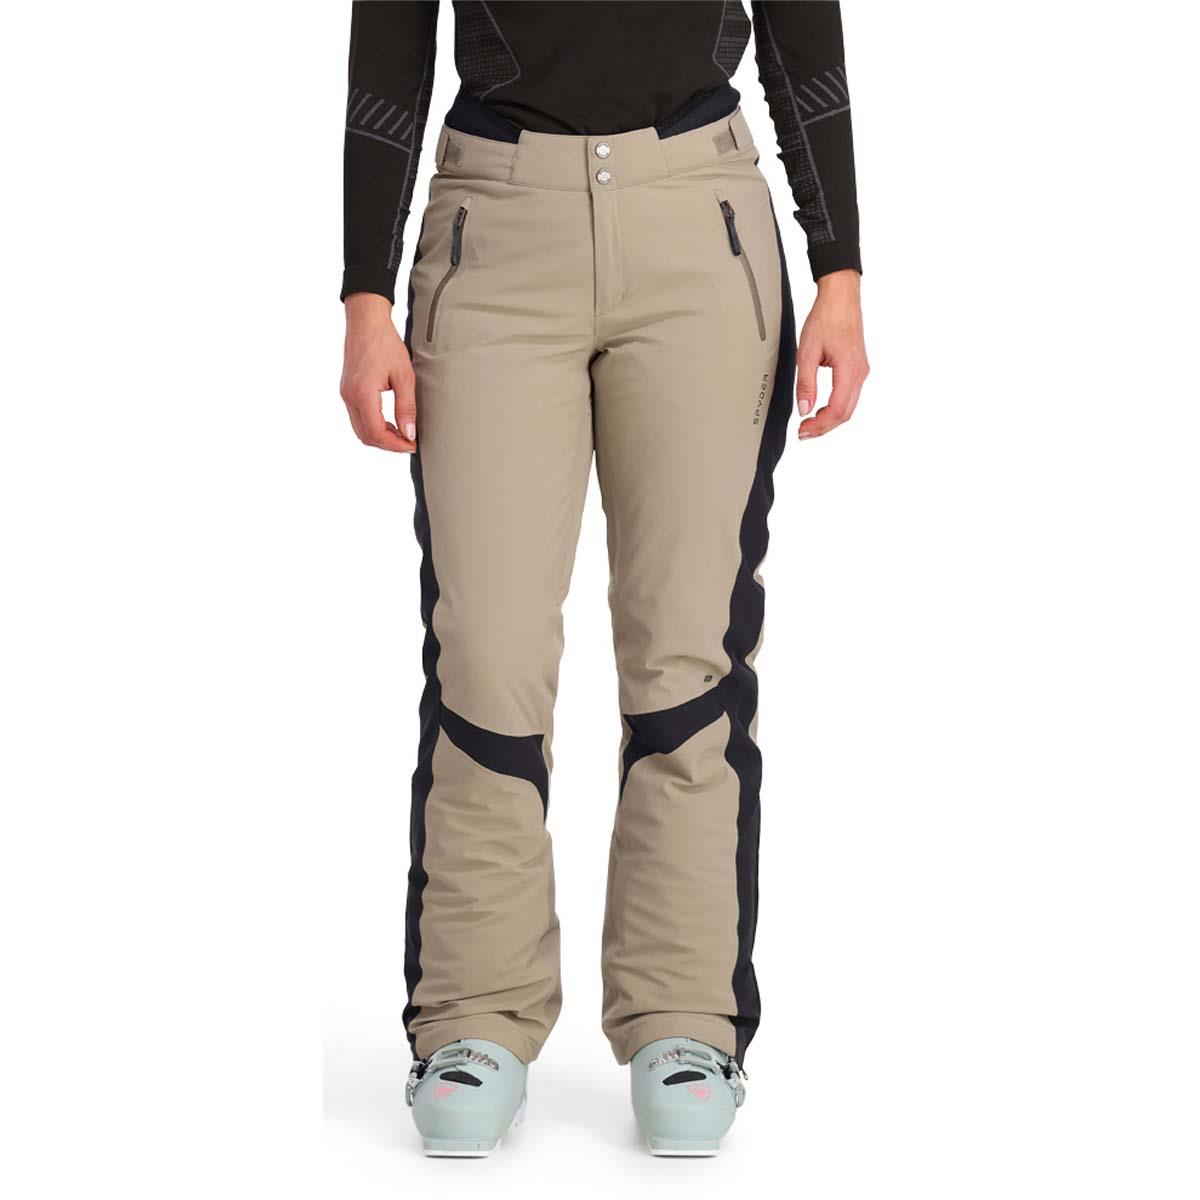 Echo Insulated Ski Pant - Black - Womens | Spyder